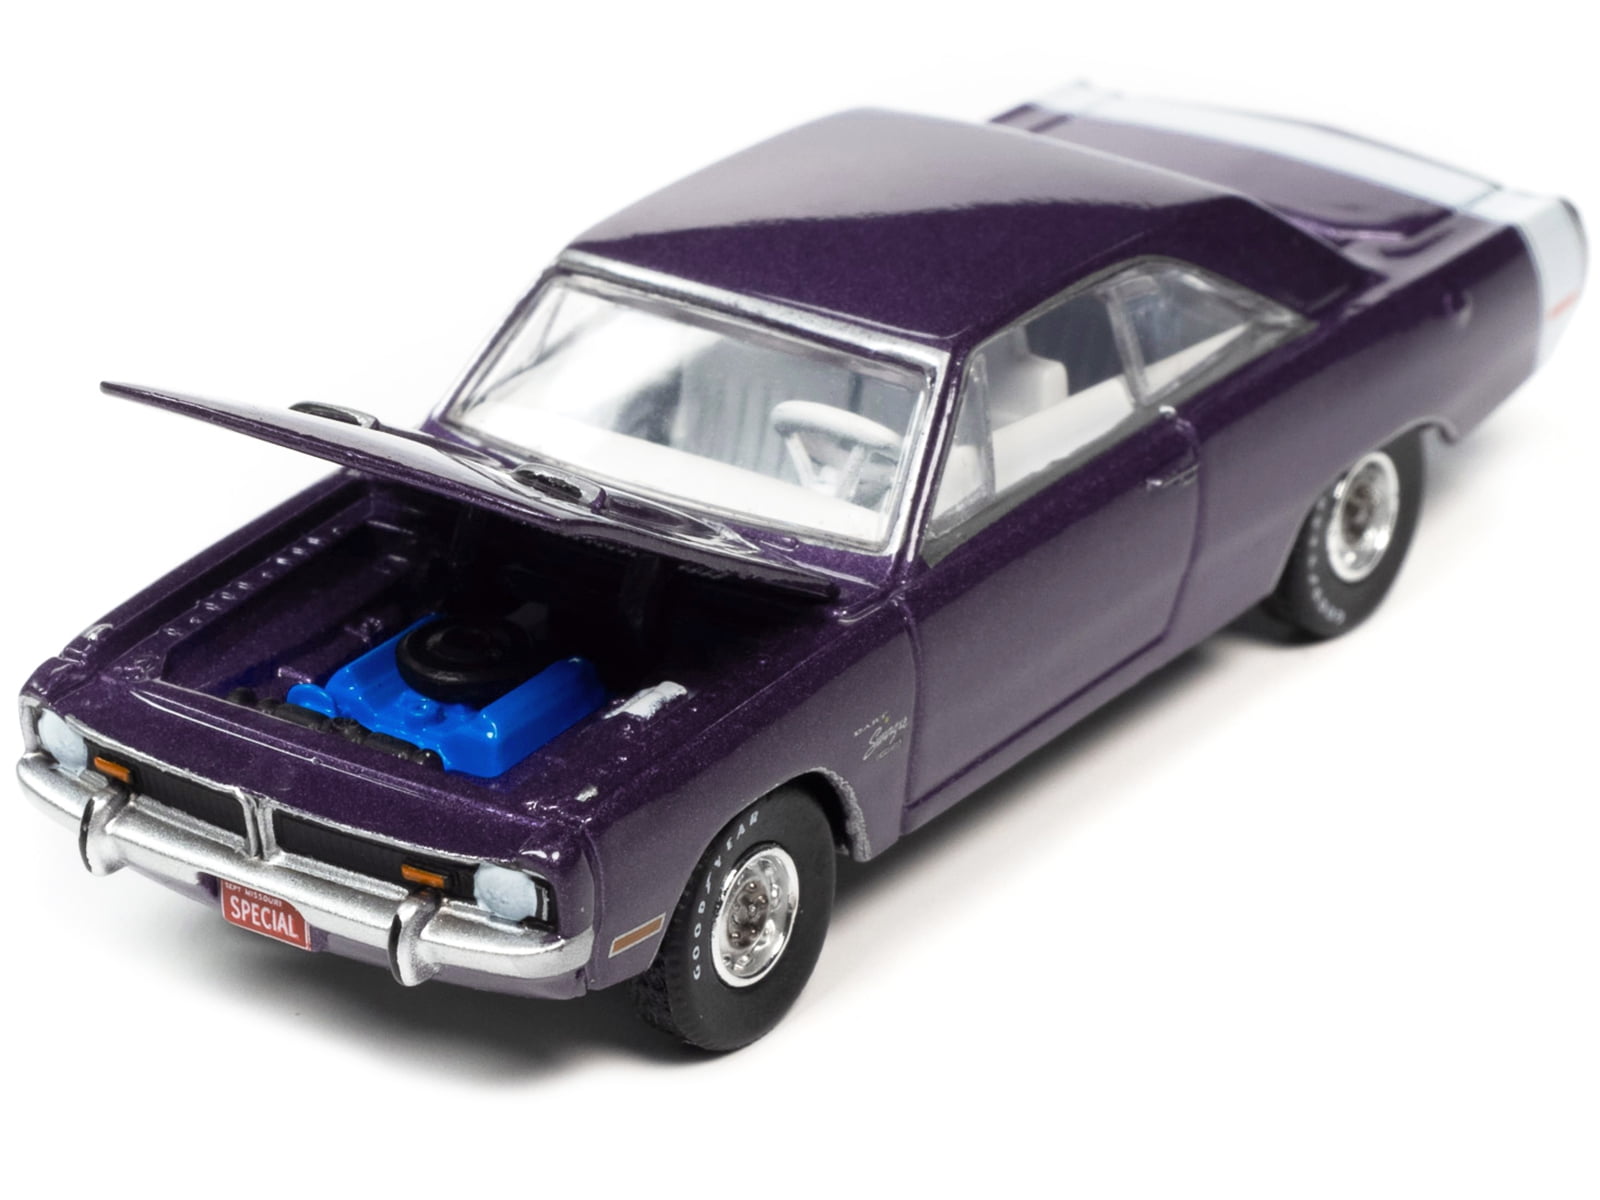 Diecast 1971 Dodge Dart Swinger 340 Special Plum Crazy Purple Metallic with White Tail Stripe